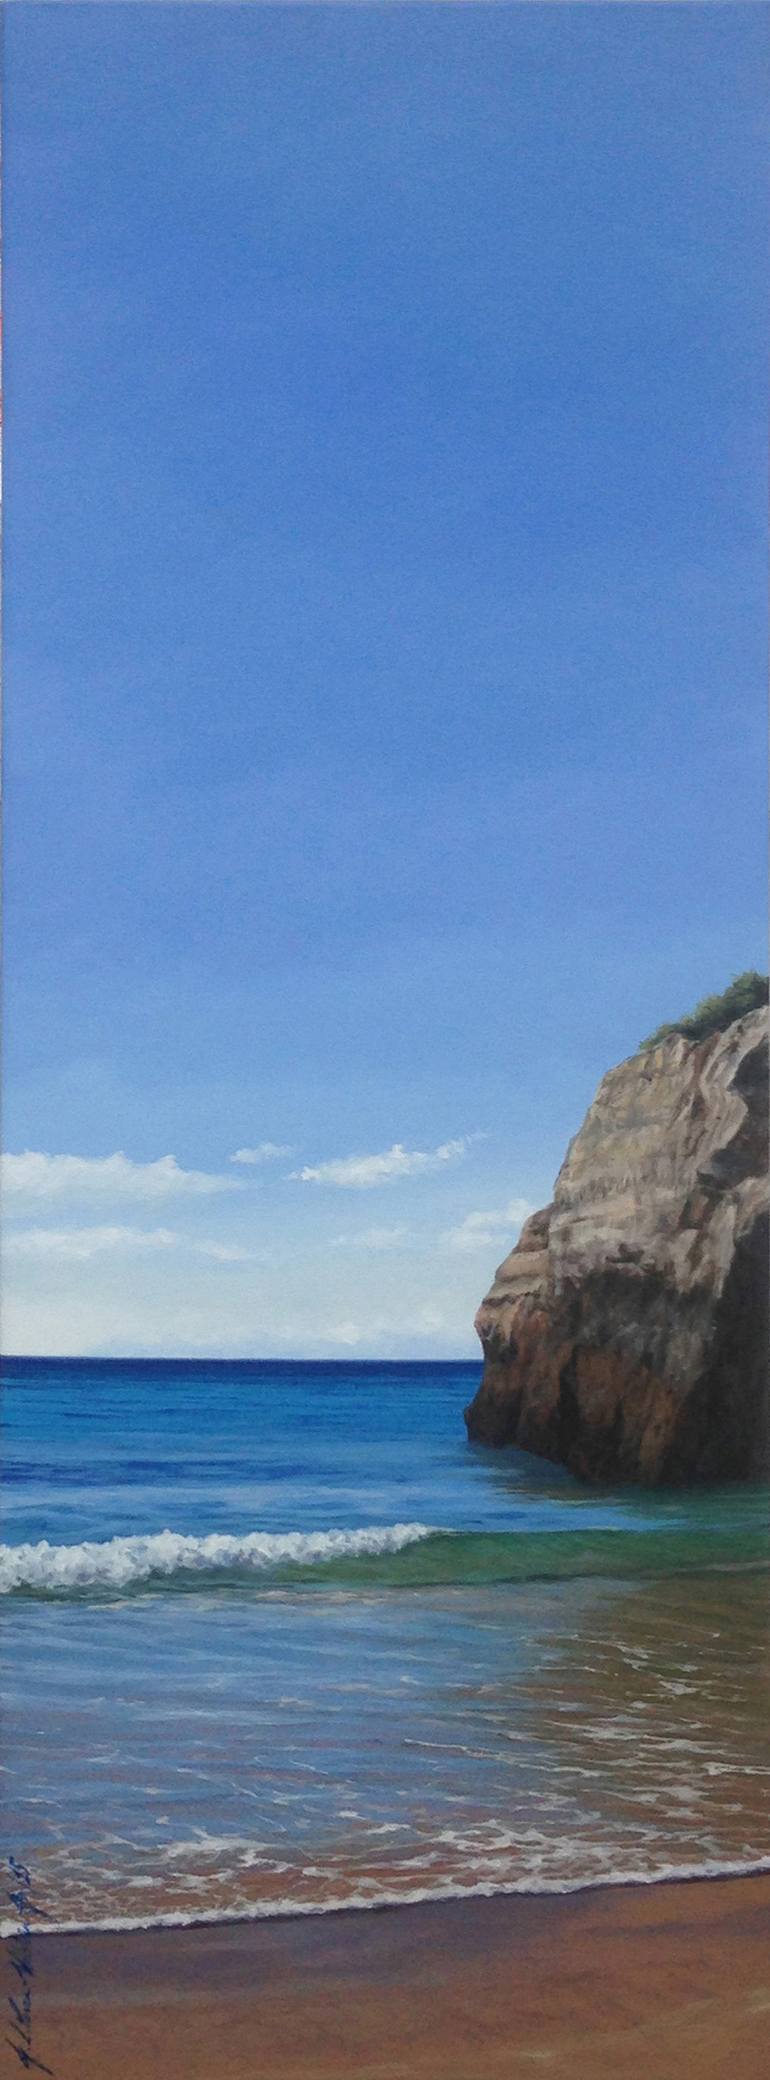 Original Realism Seascape Painting by Jose Luis Cerra Wollstein